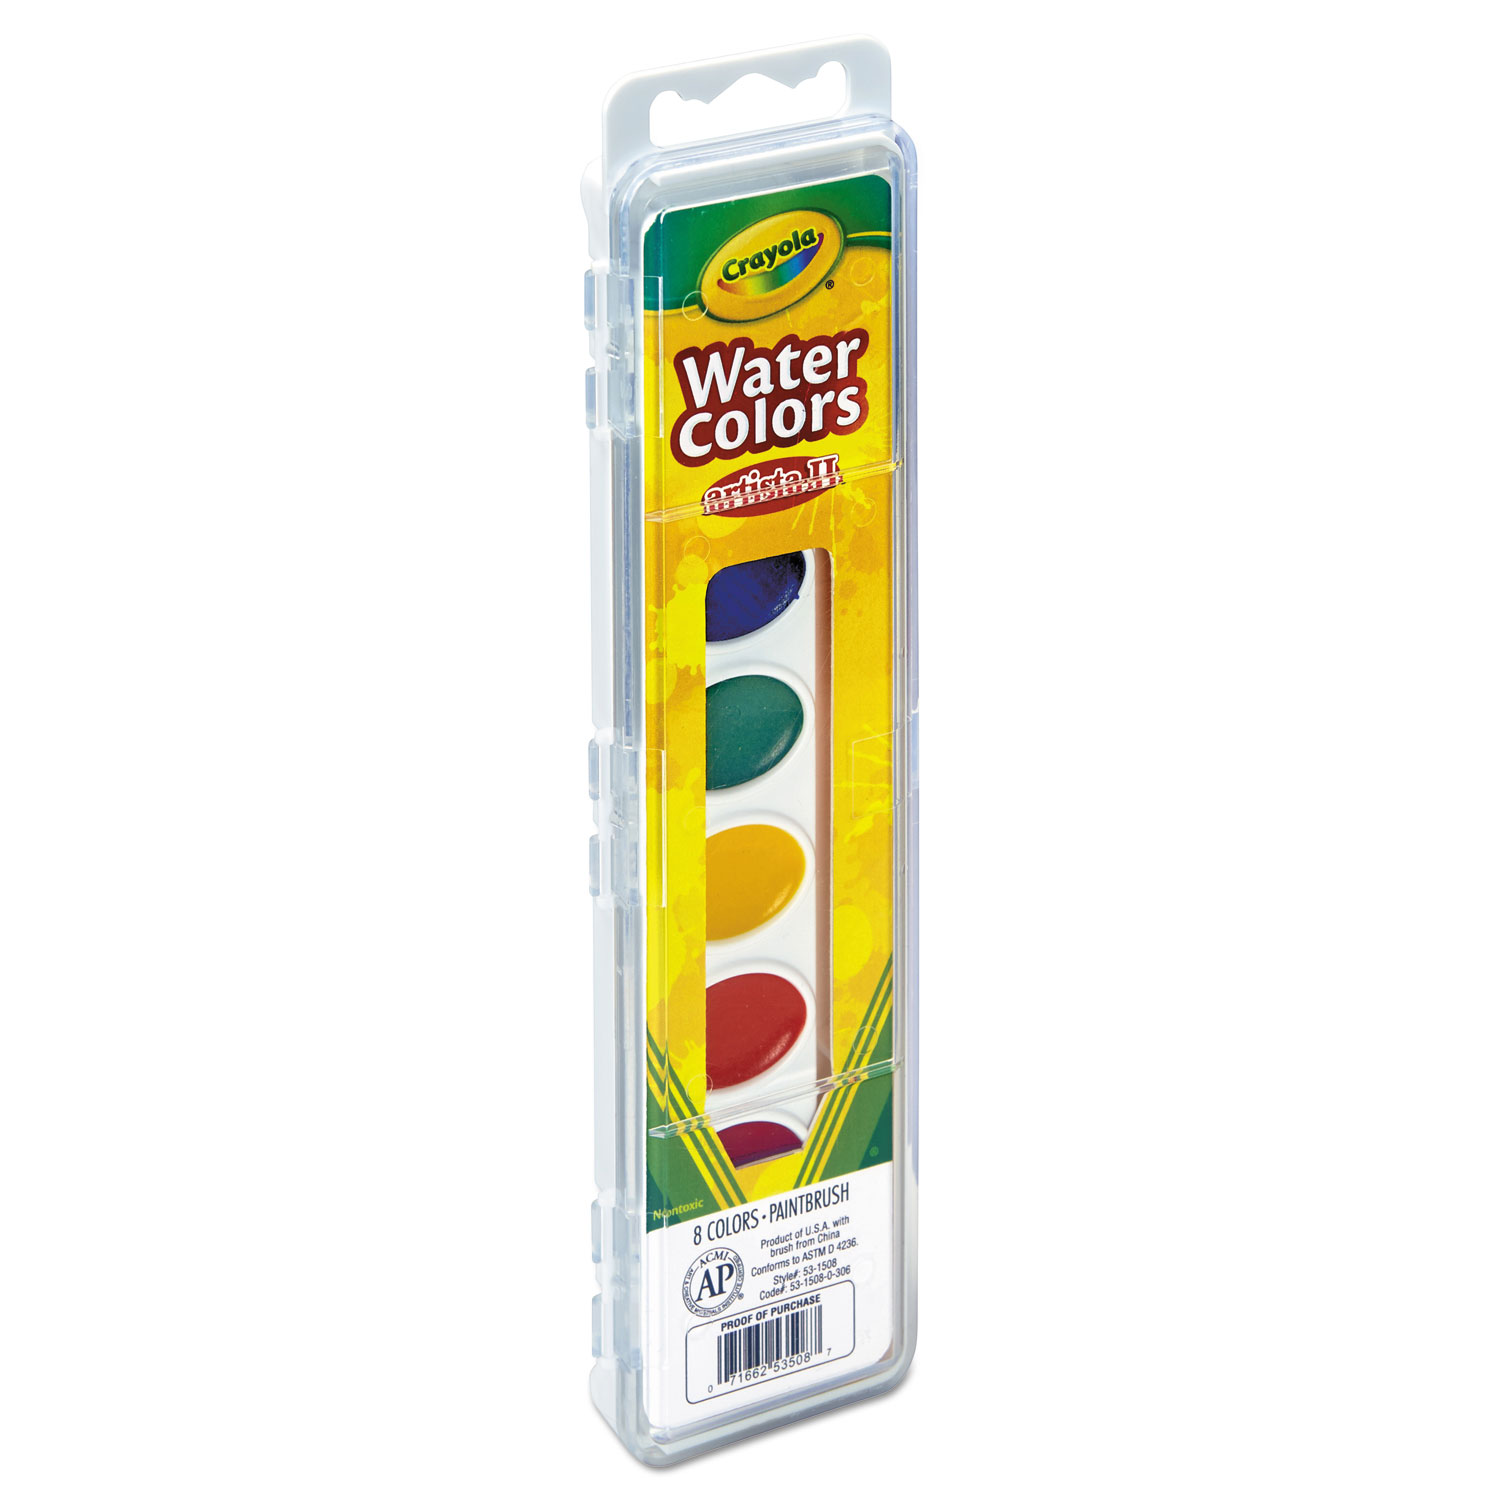 Crayola Broad Line Washable Markers, Broad Bullet Tip, Blue, 12/Box